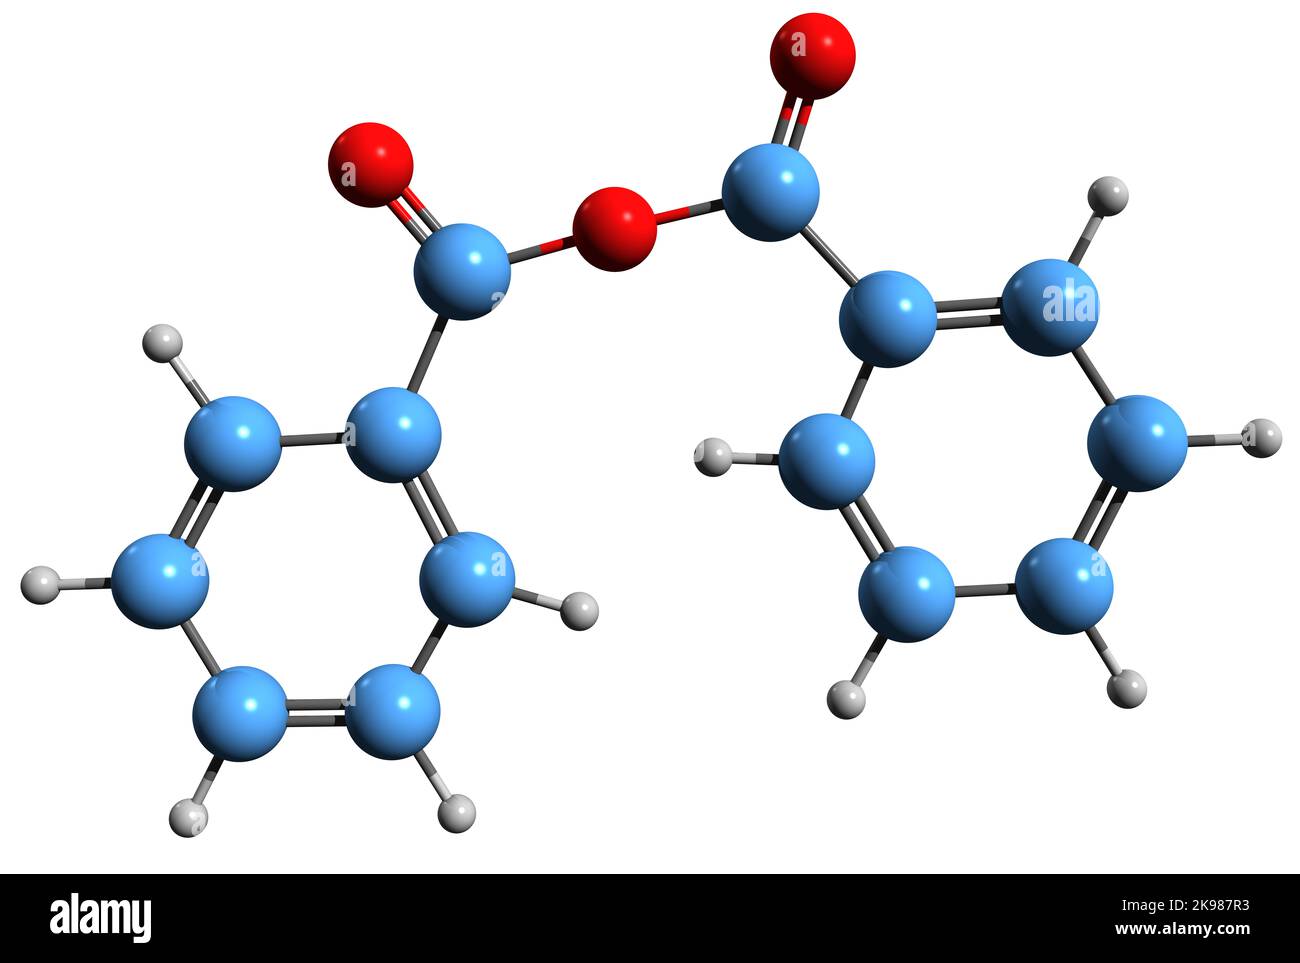 benzoic anhydride sodium borohydride